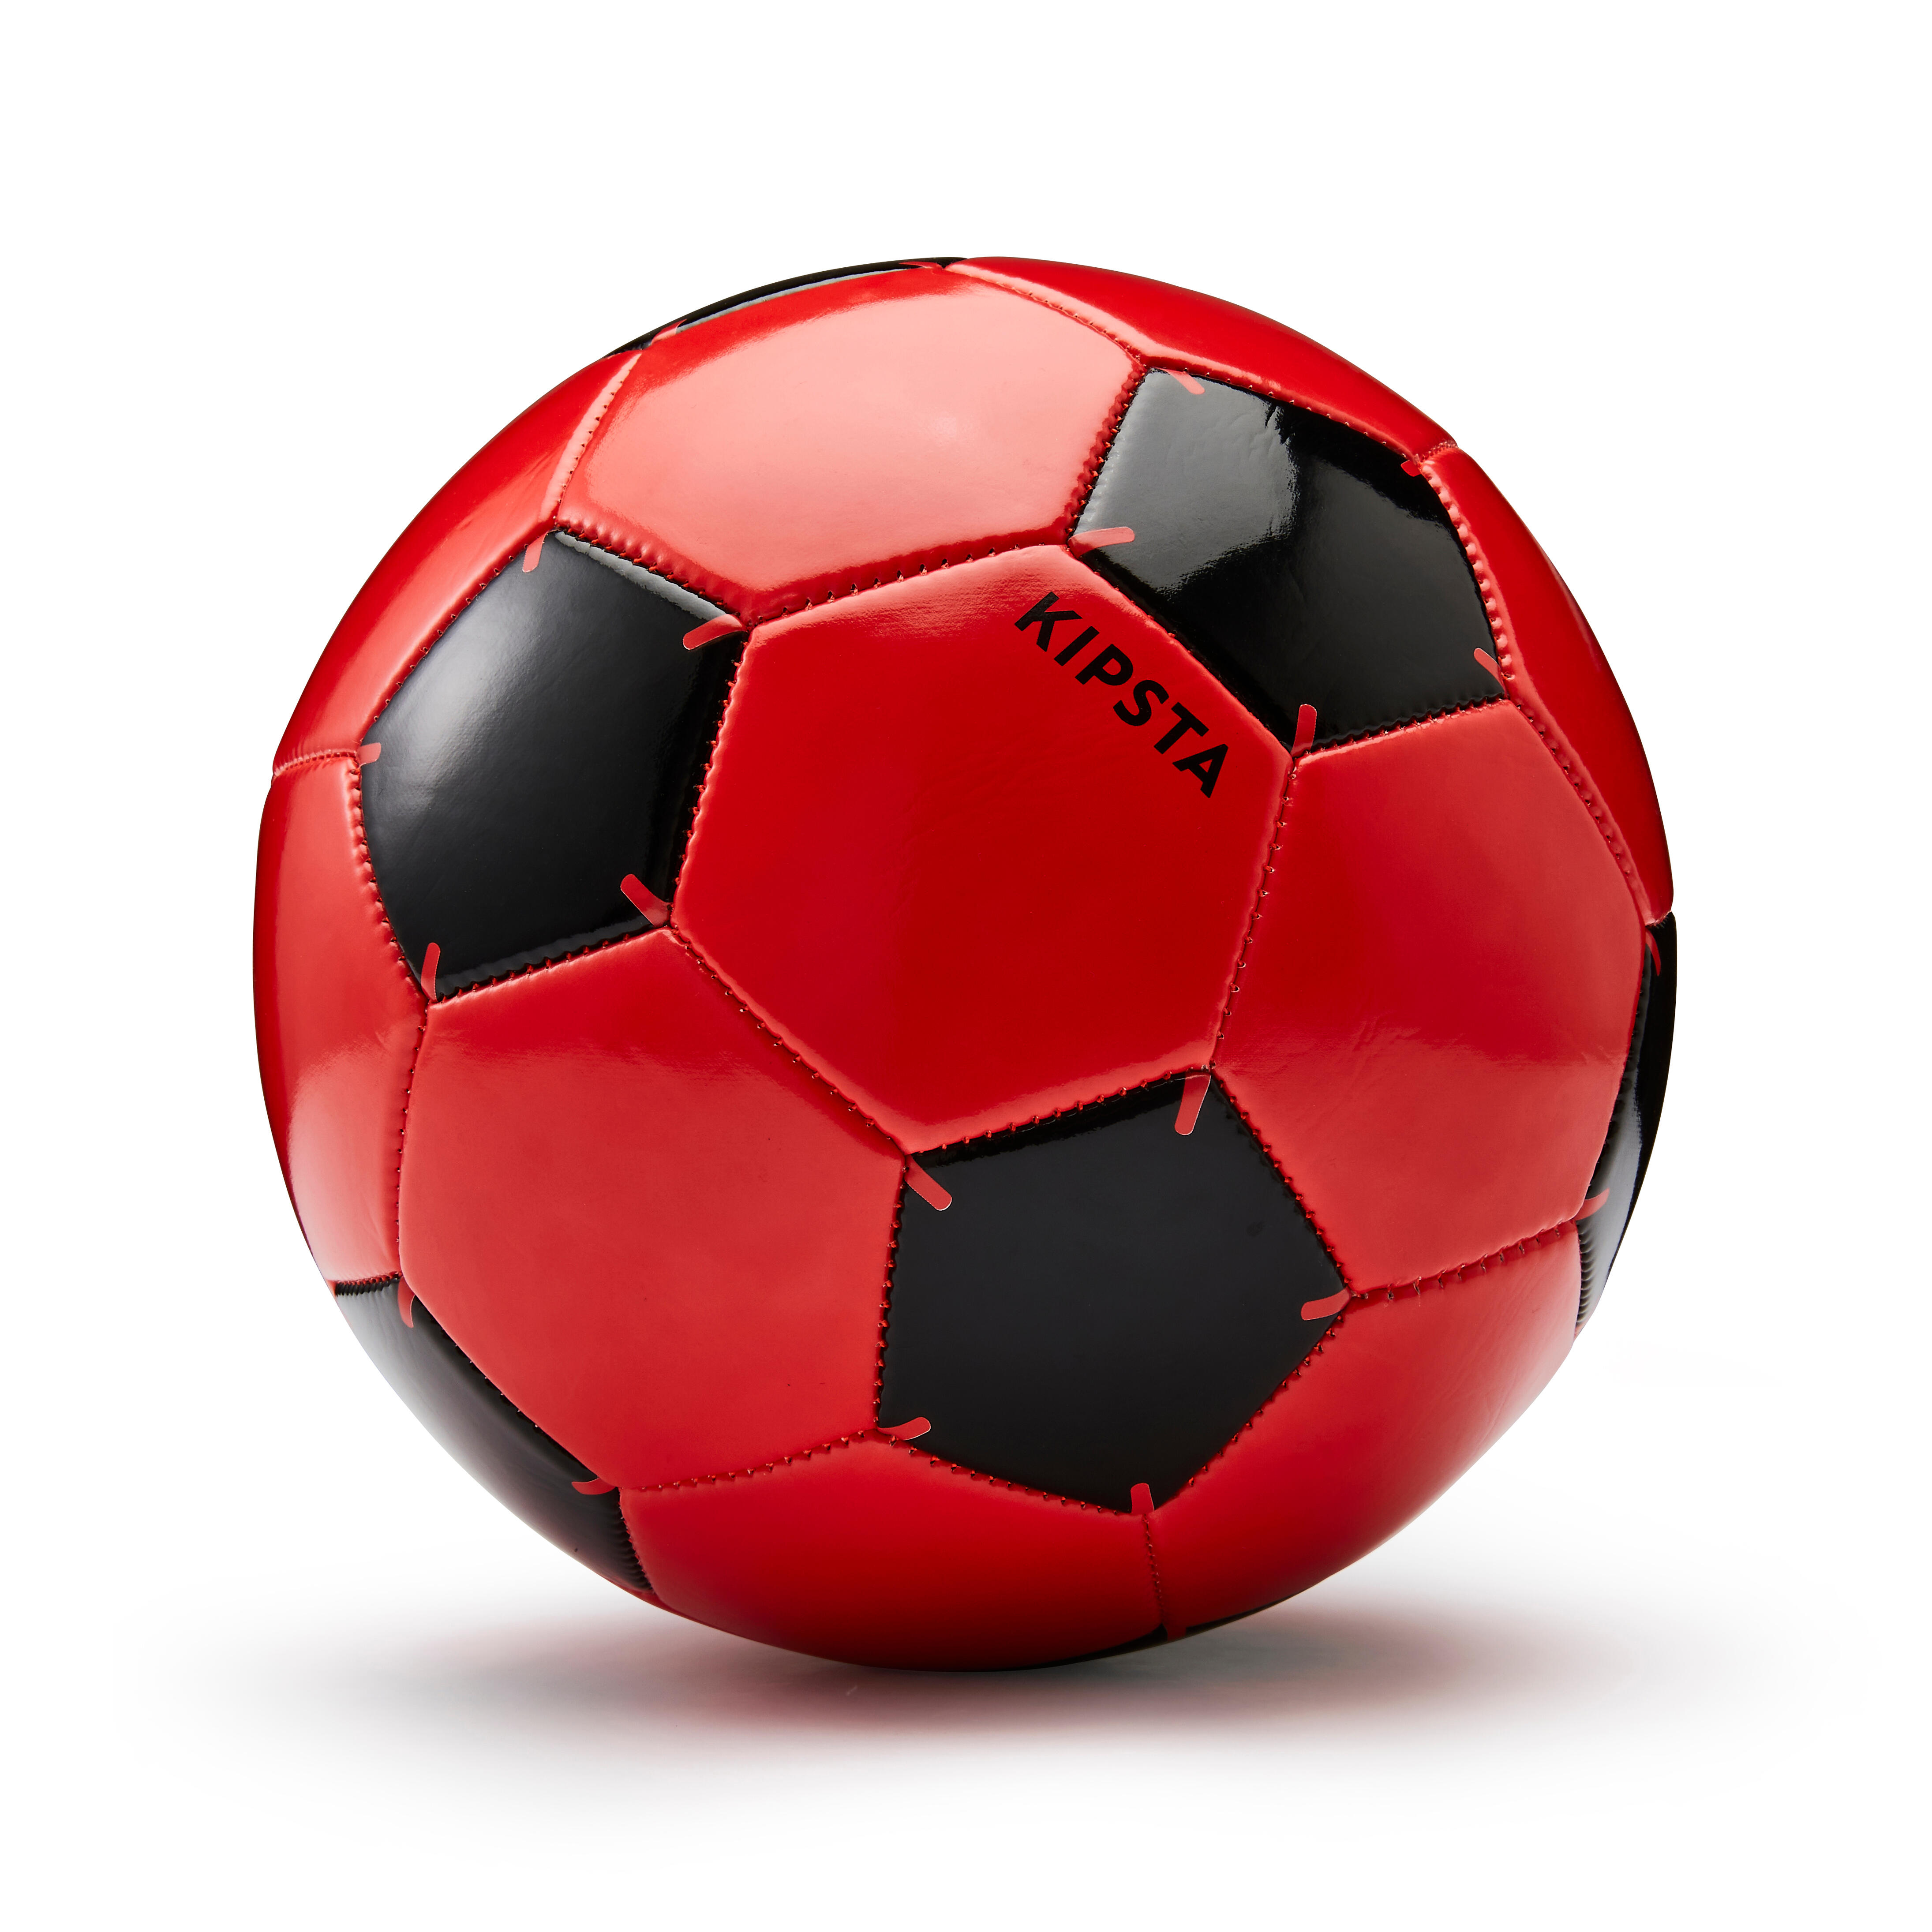 Credo pereza Pensativo Football Ball Training Size 4 (Age 8-12) First Kick- Red